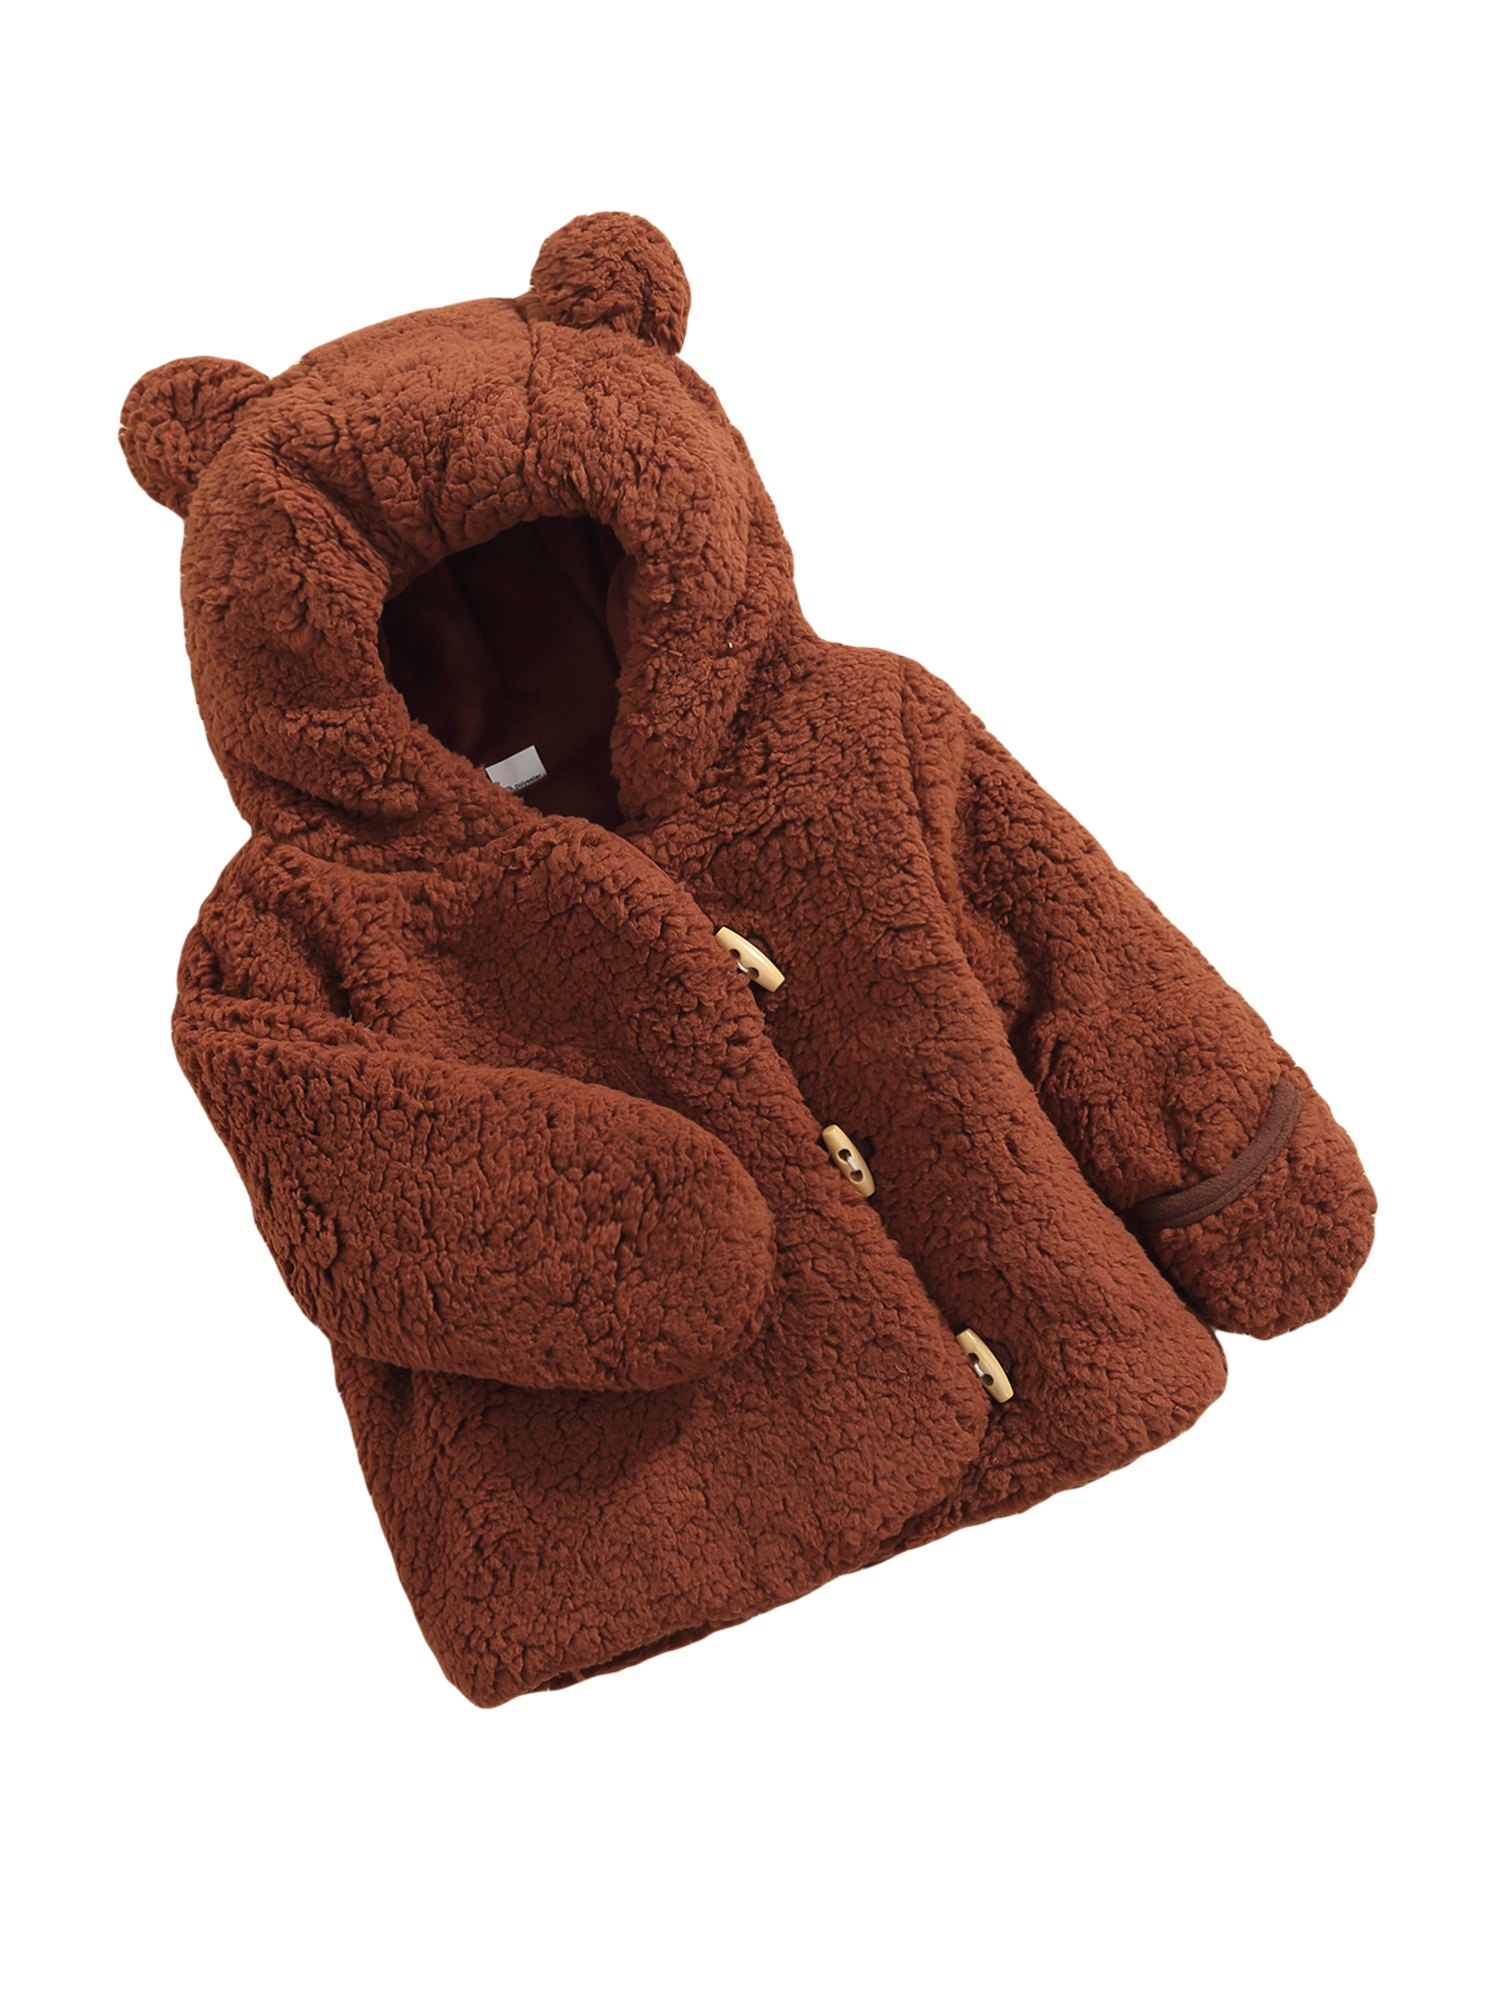 aturustex Baby Boys Girls Fleece Jacket Bear Ear Hoodie Warm Winter Outwear Top - image 2 of 7